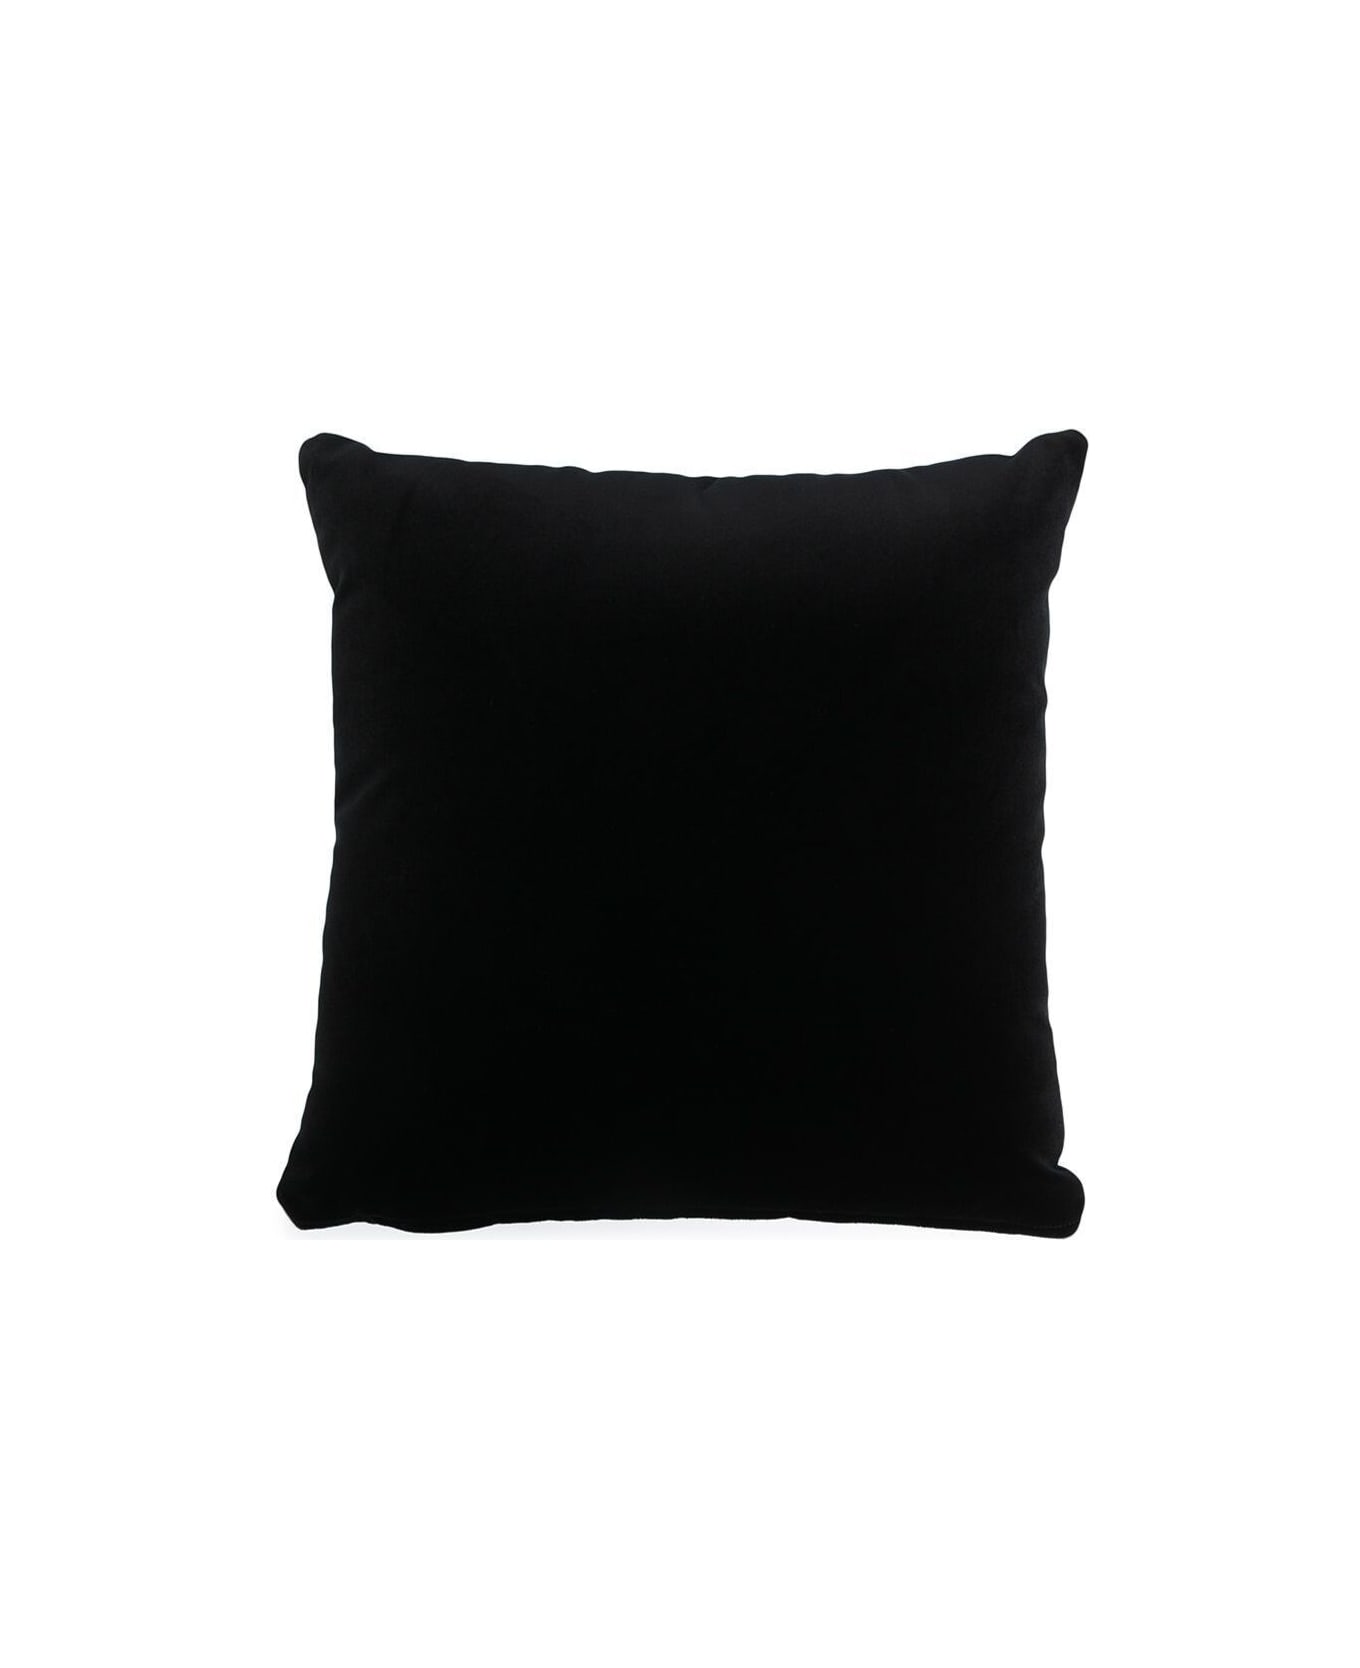 Versace Black Velvet Pillow With Gold Rhinestone Decoration Representing The Versace Logo - Black